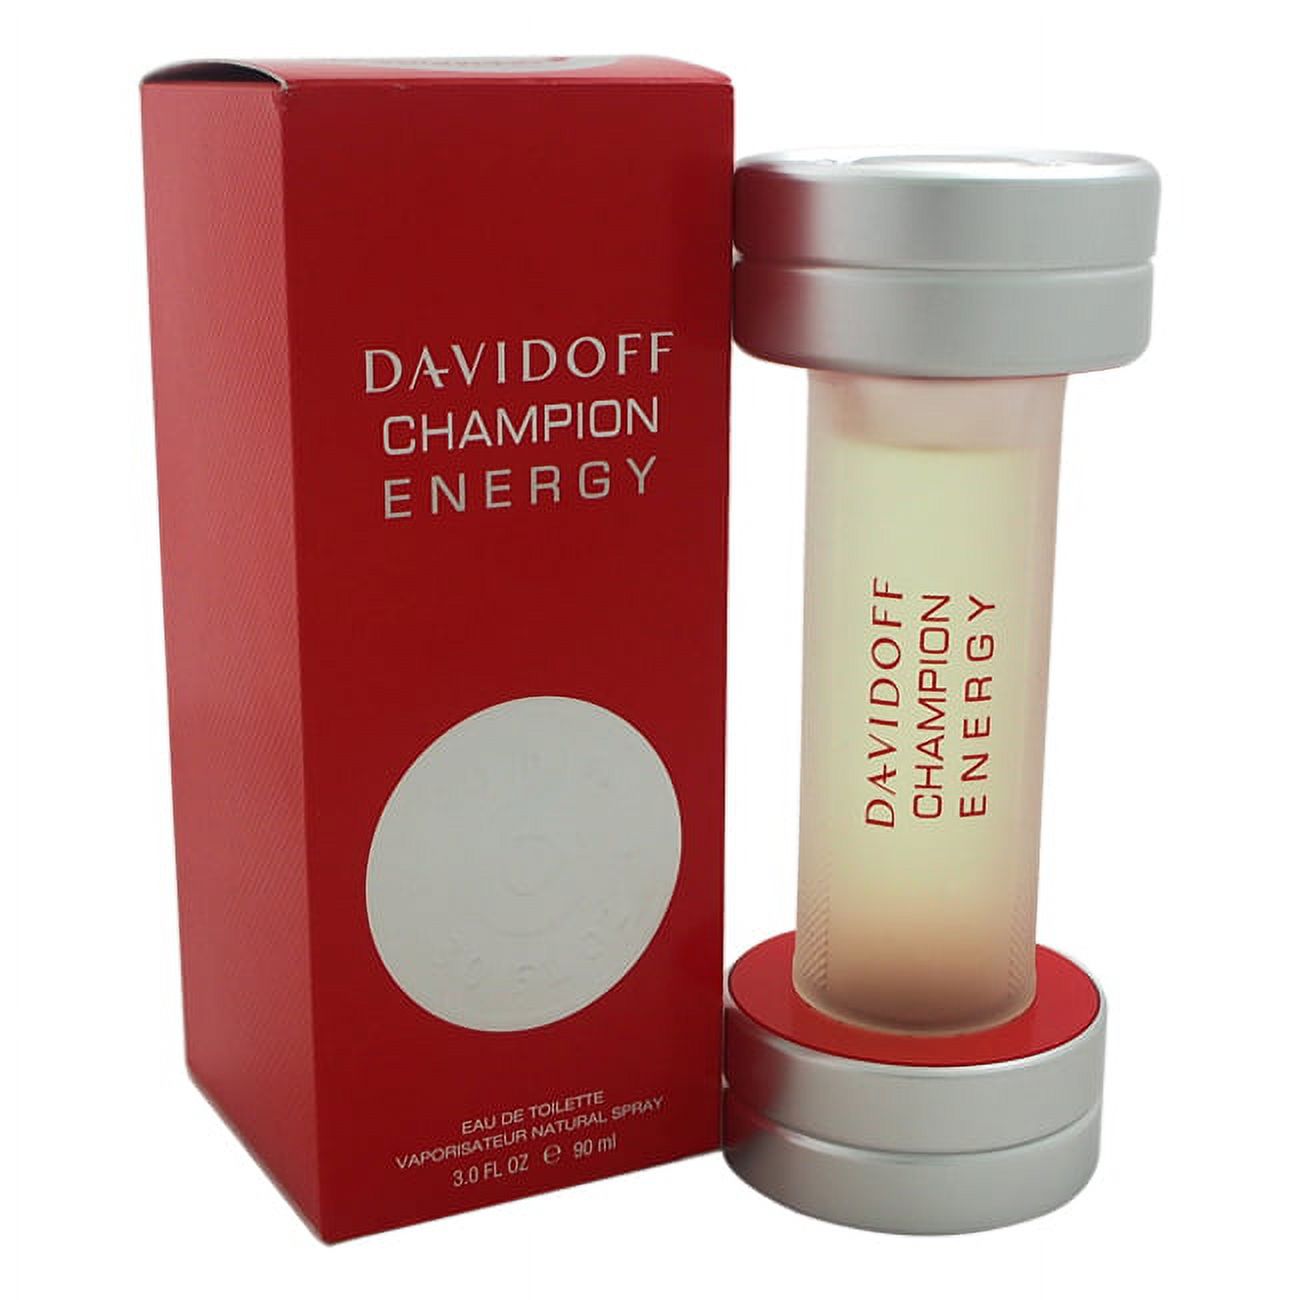 Davidoff Davidoff Champion Energy Eau de toilette Spray For Men 3 oz - image 1 of 5